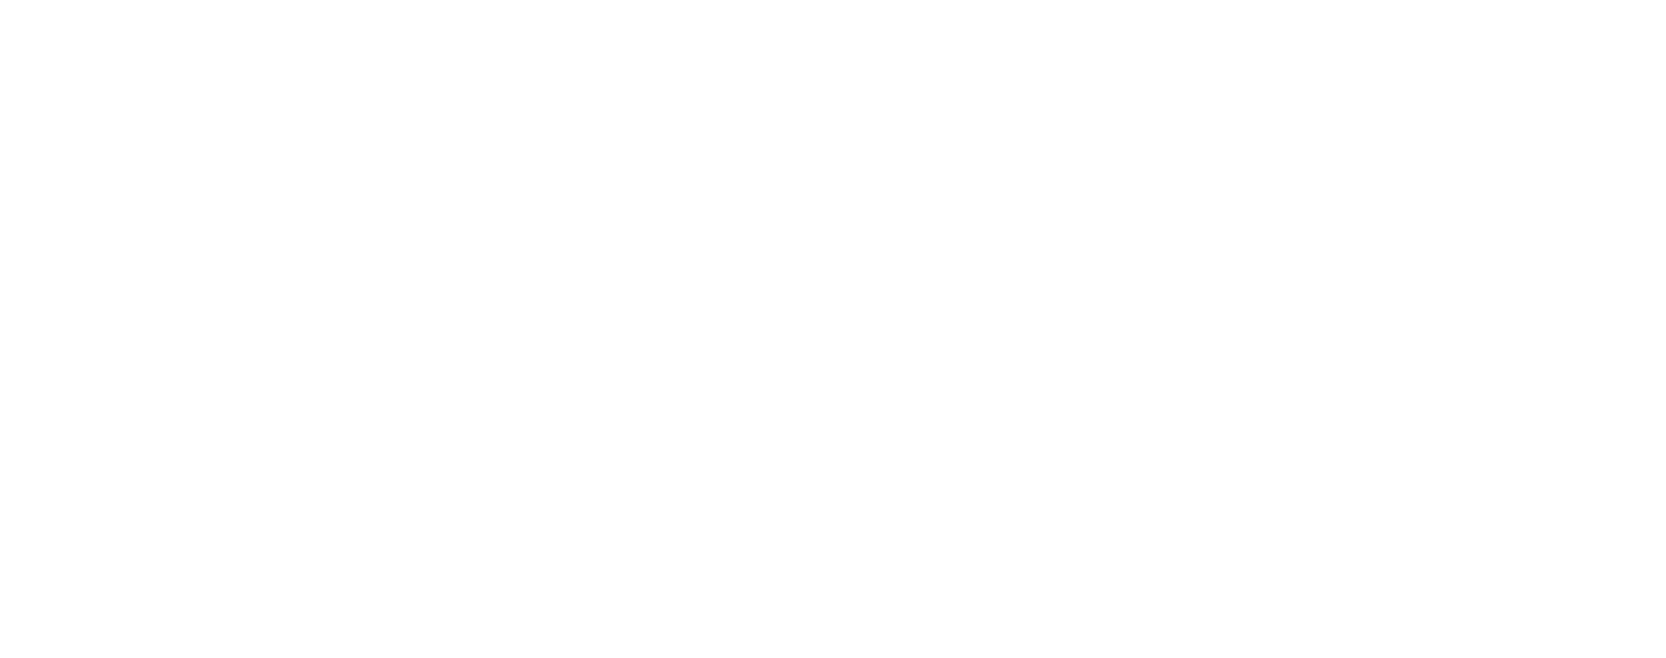 wash method carwash chemistry logo